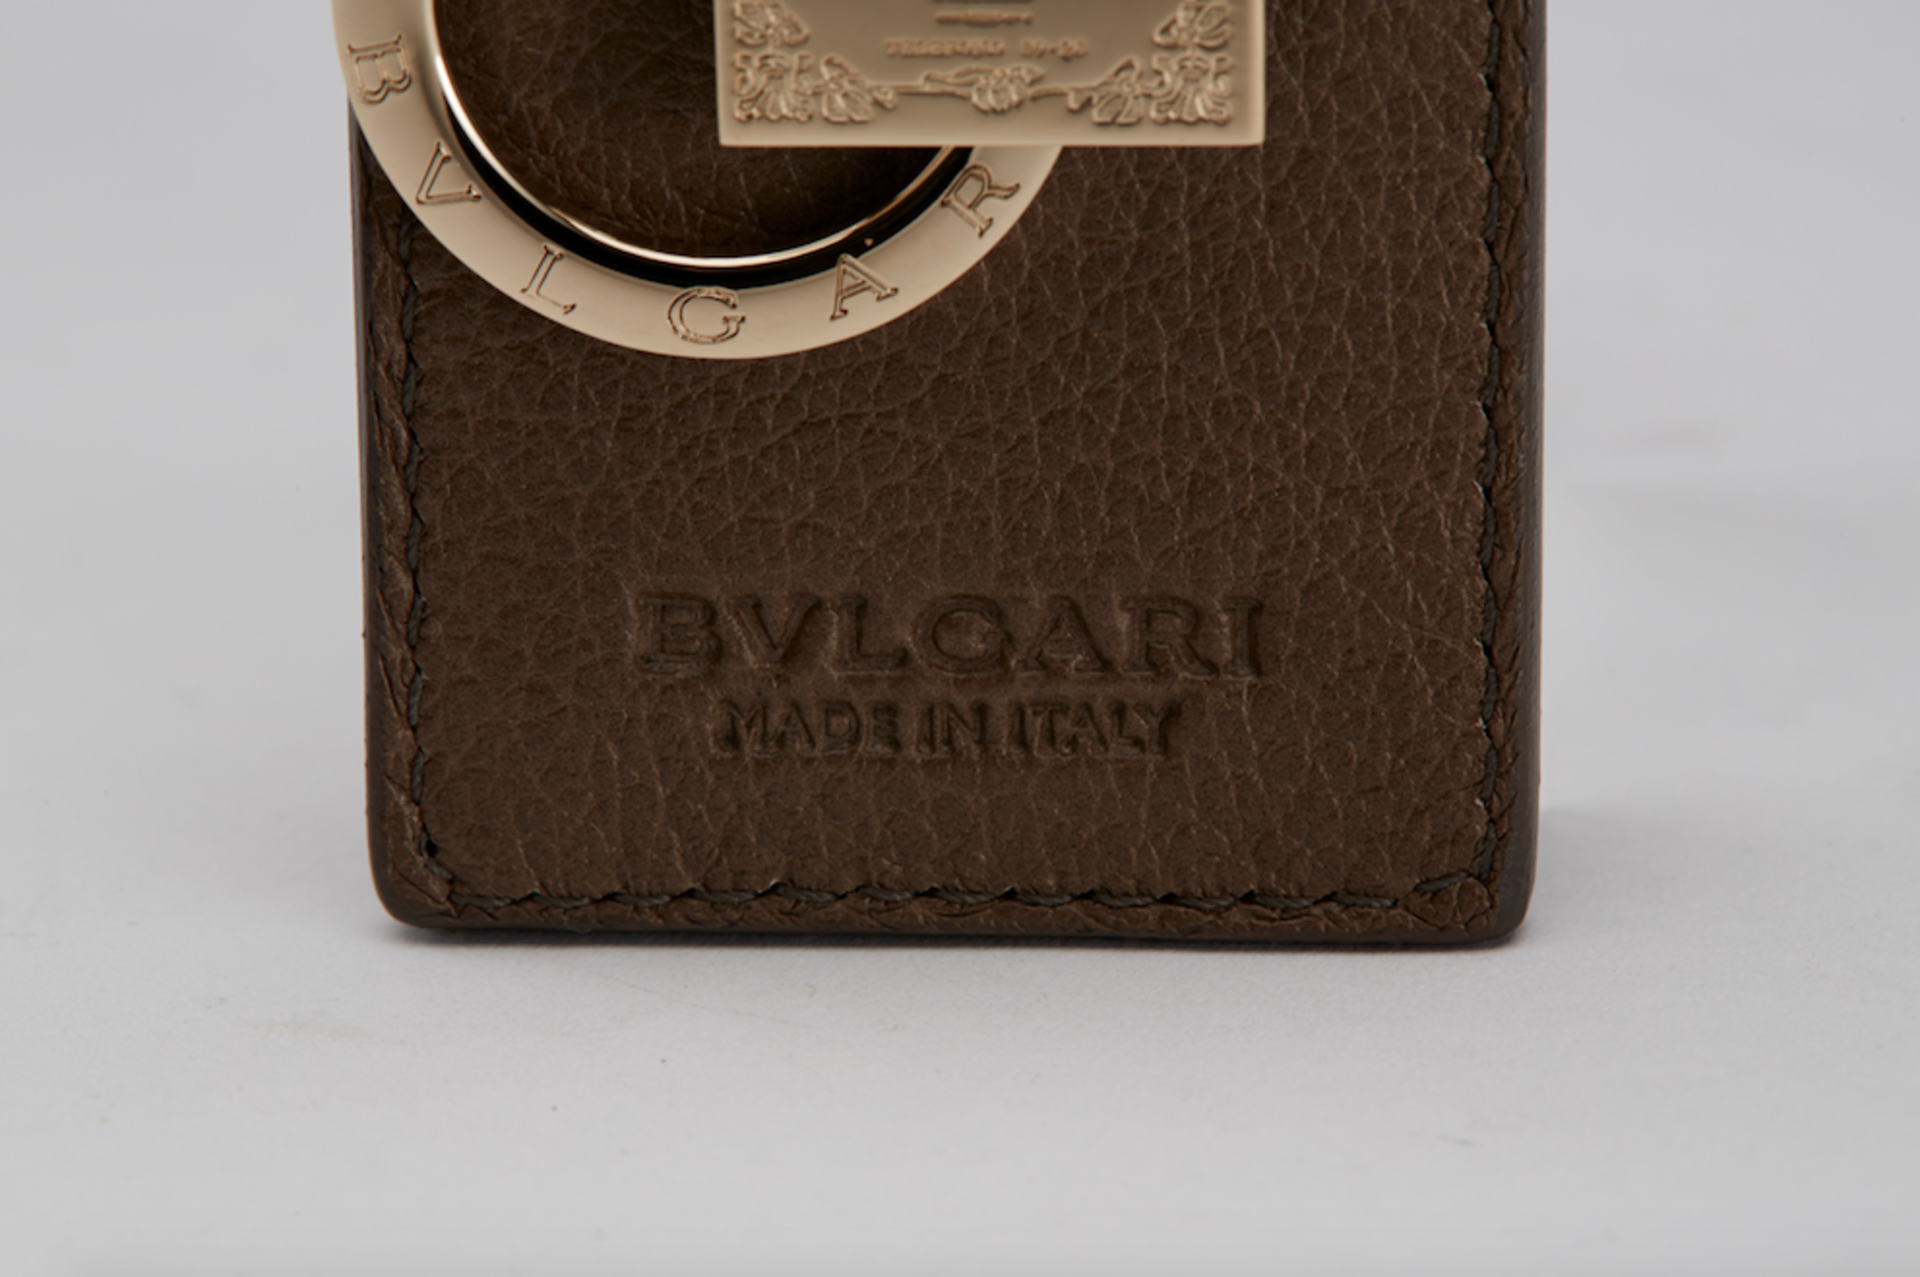 Bvlgari, Leather Gold Pendant Keyring - Image 4 of 6